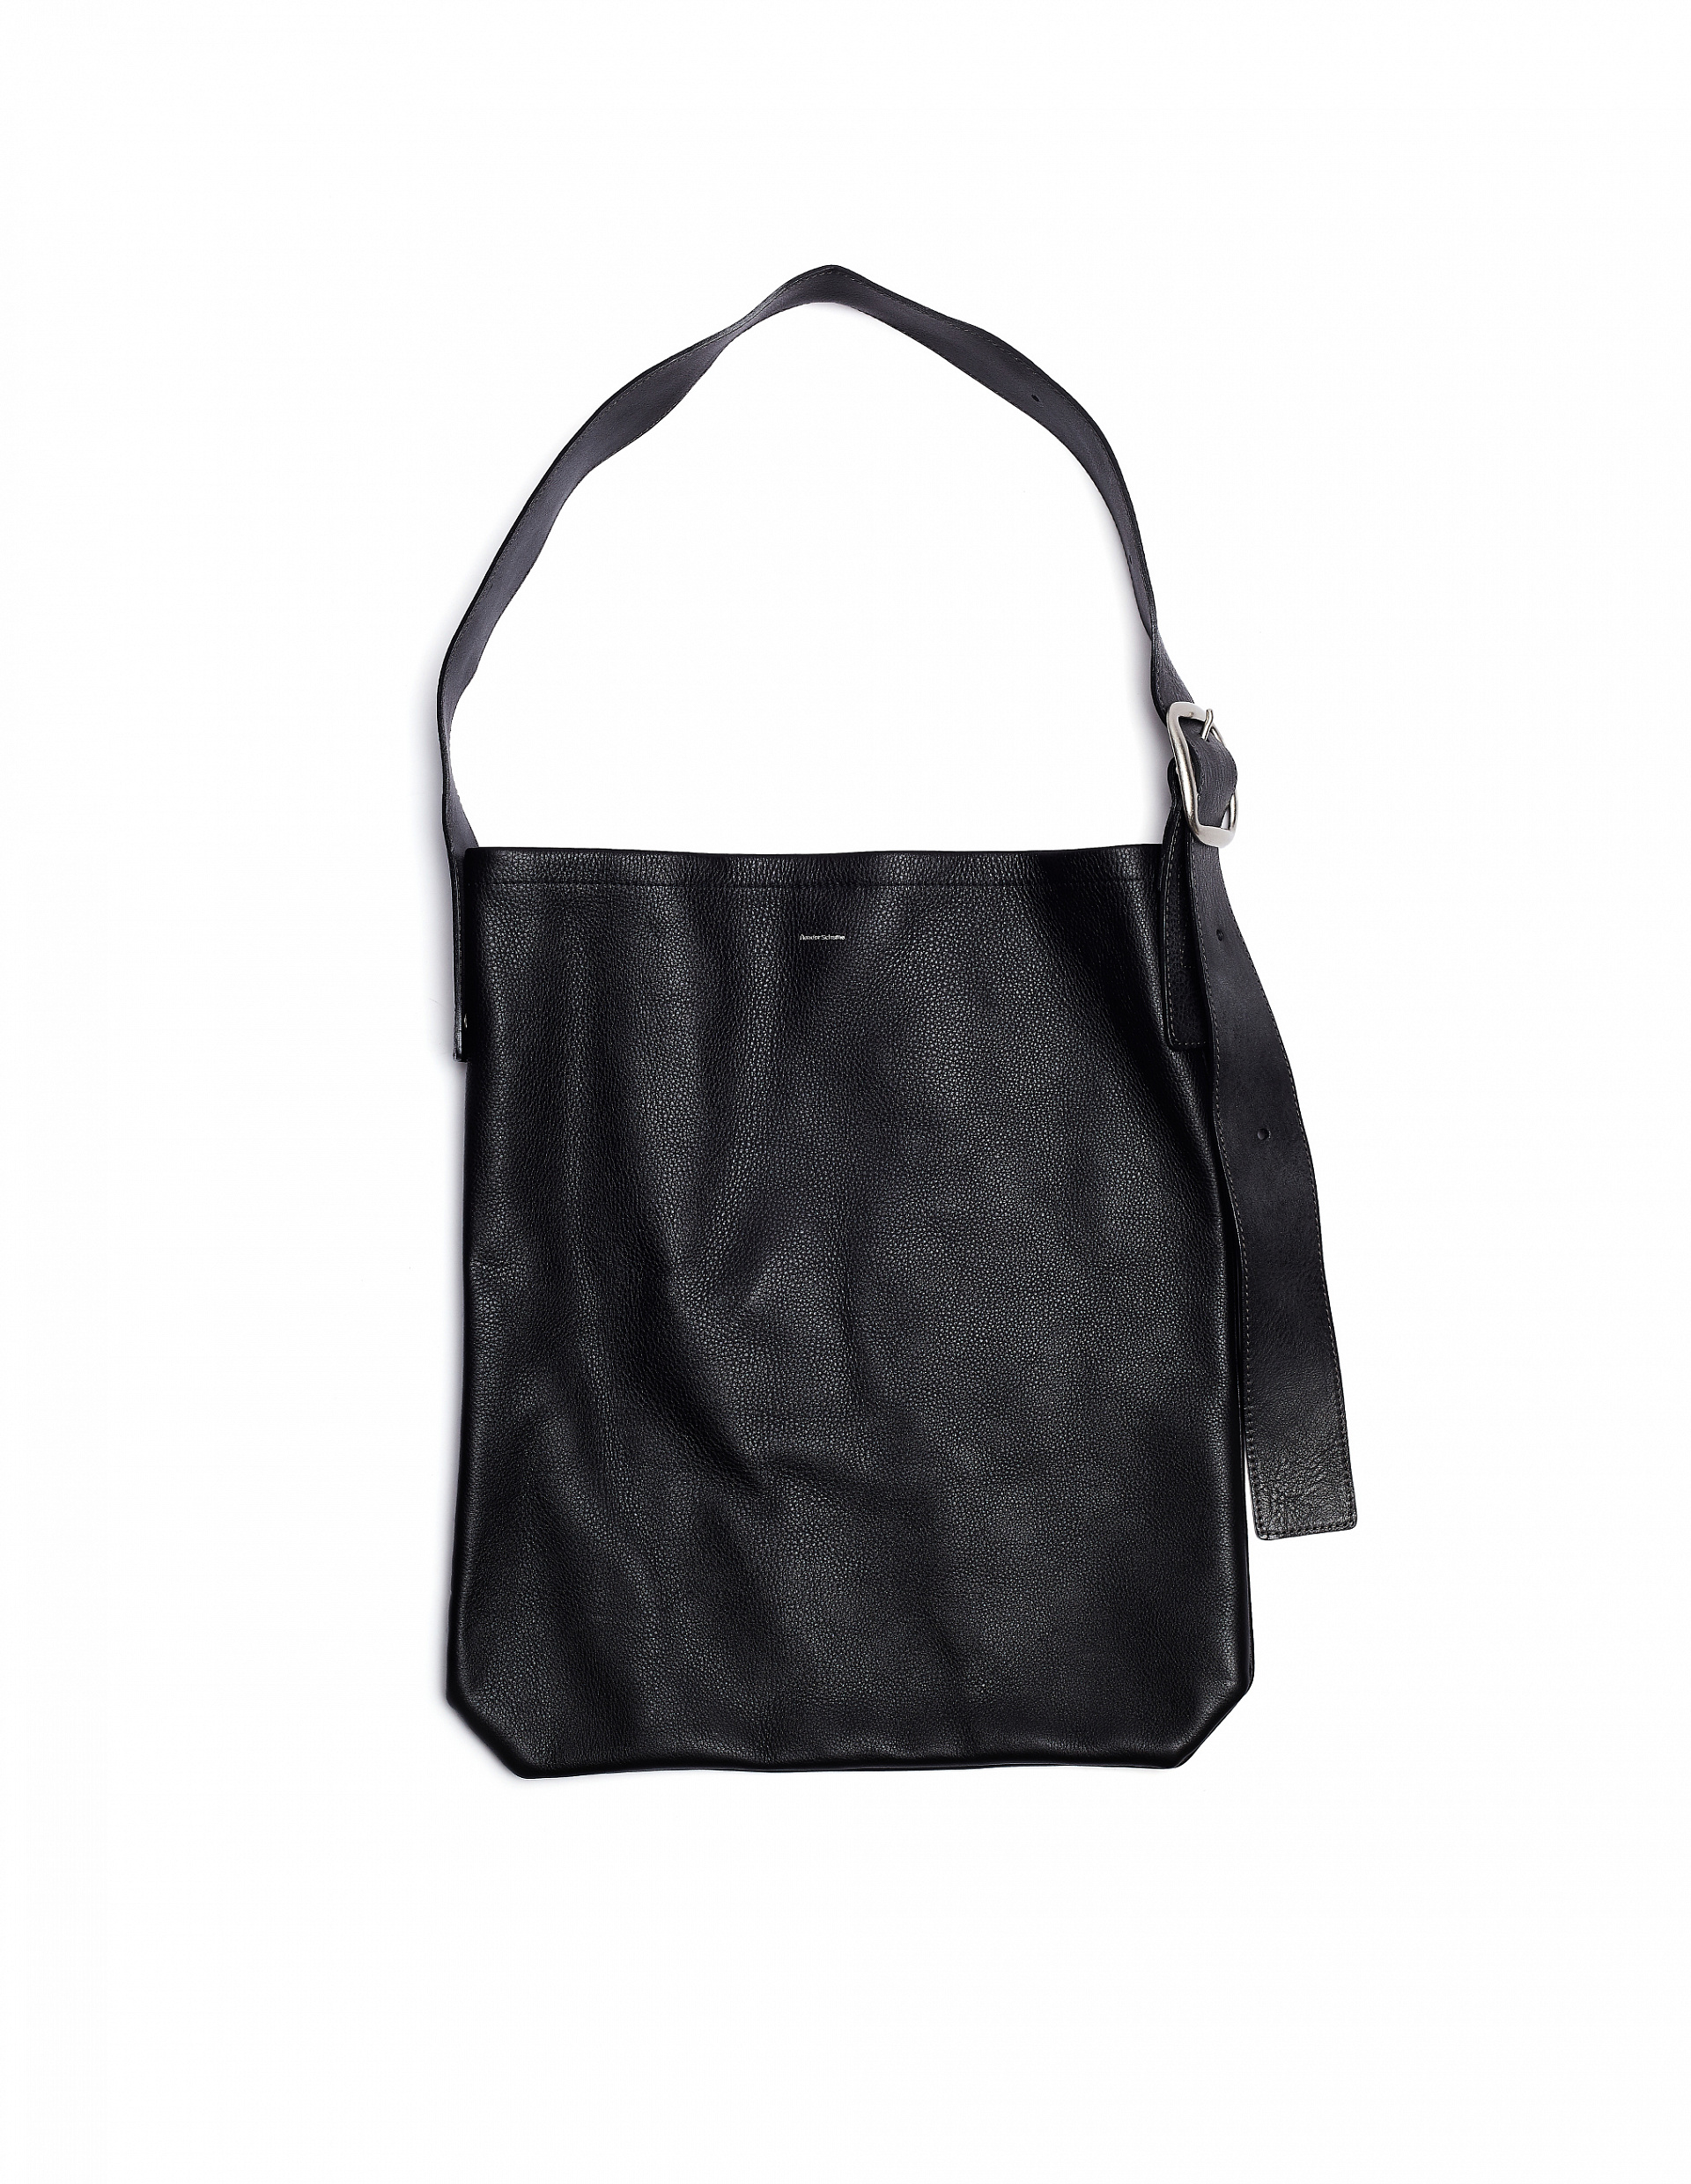 Buy Hender Scheme women black leather 'one side belt' bag for $600